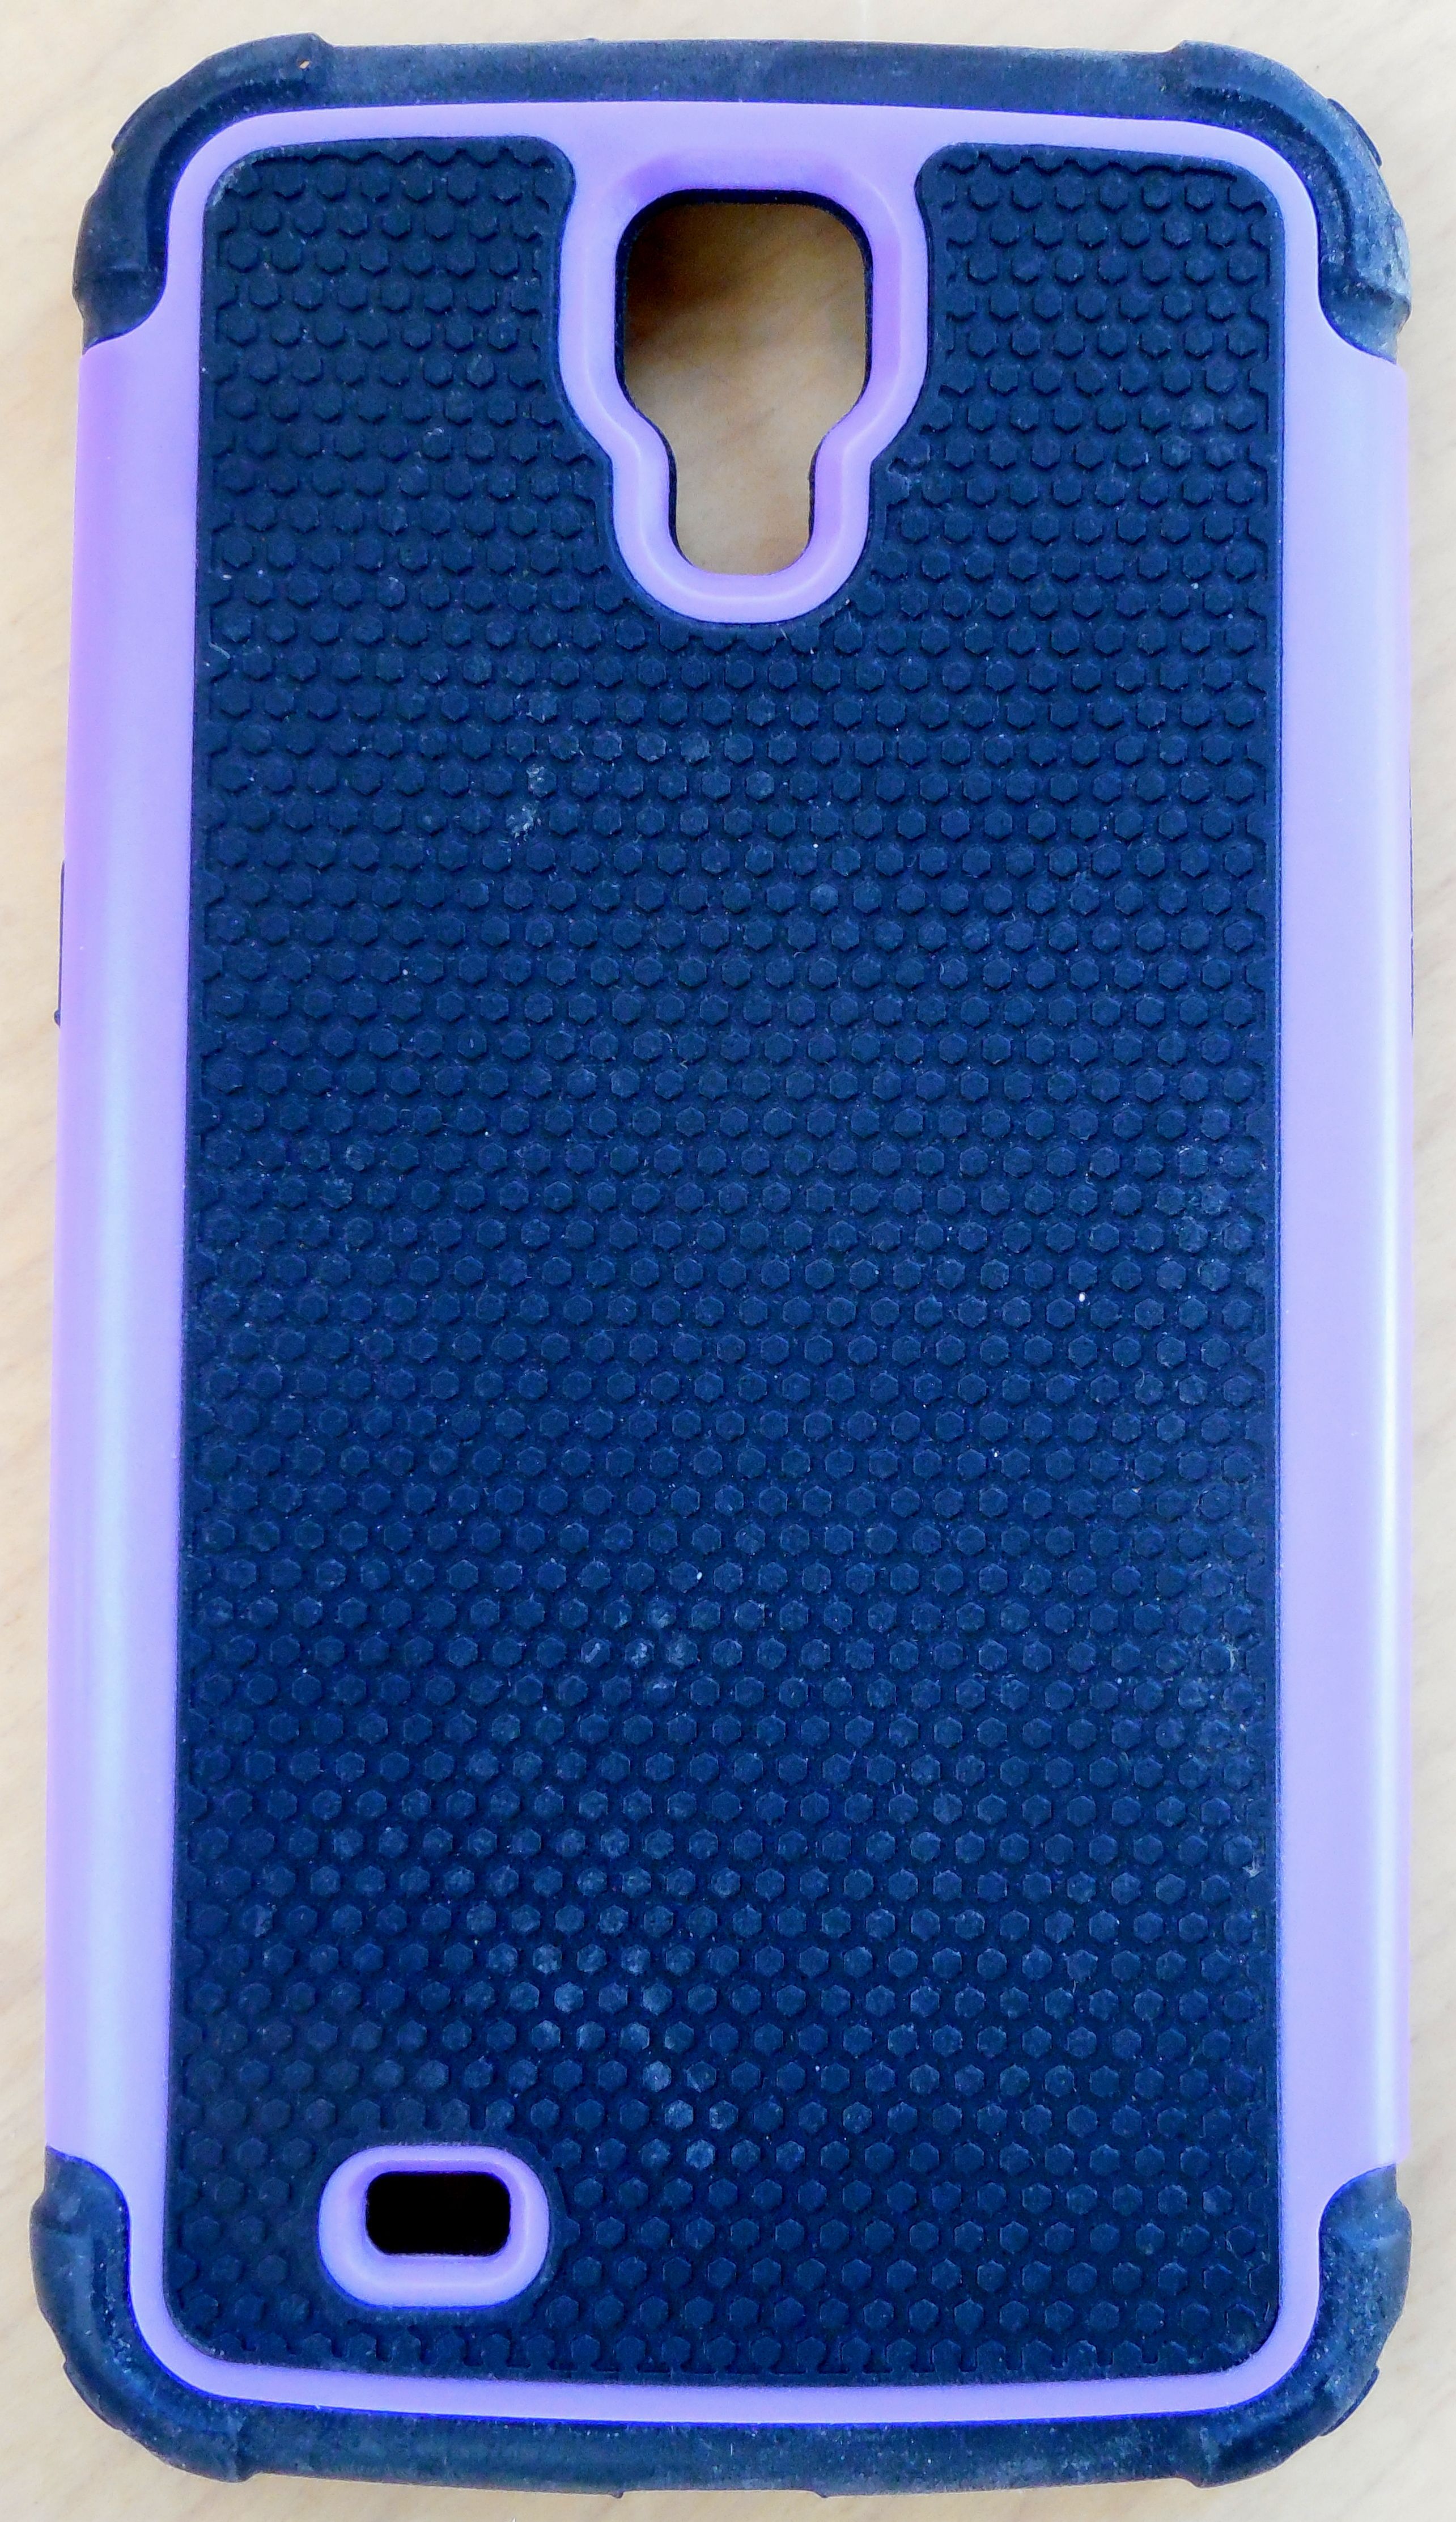 Samsung Galaxy Mega cell phone protector case Cover